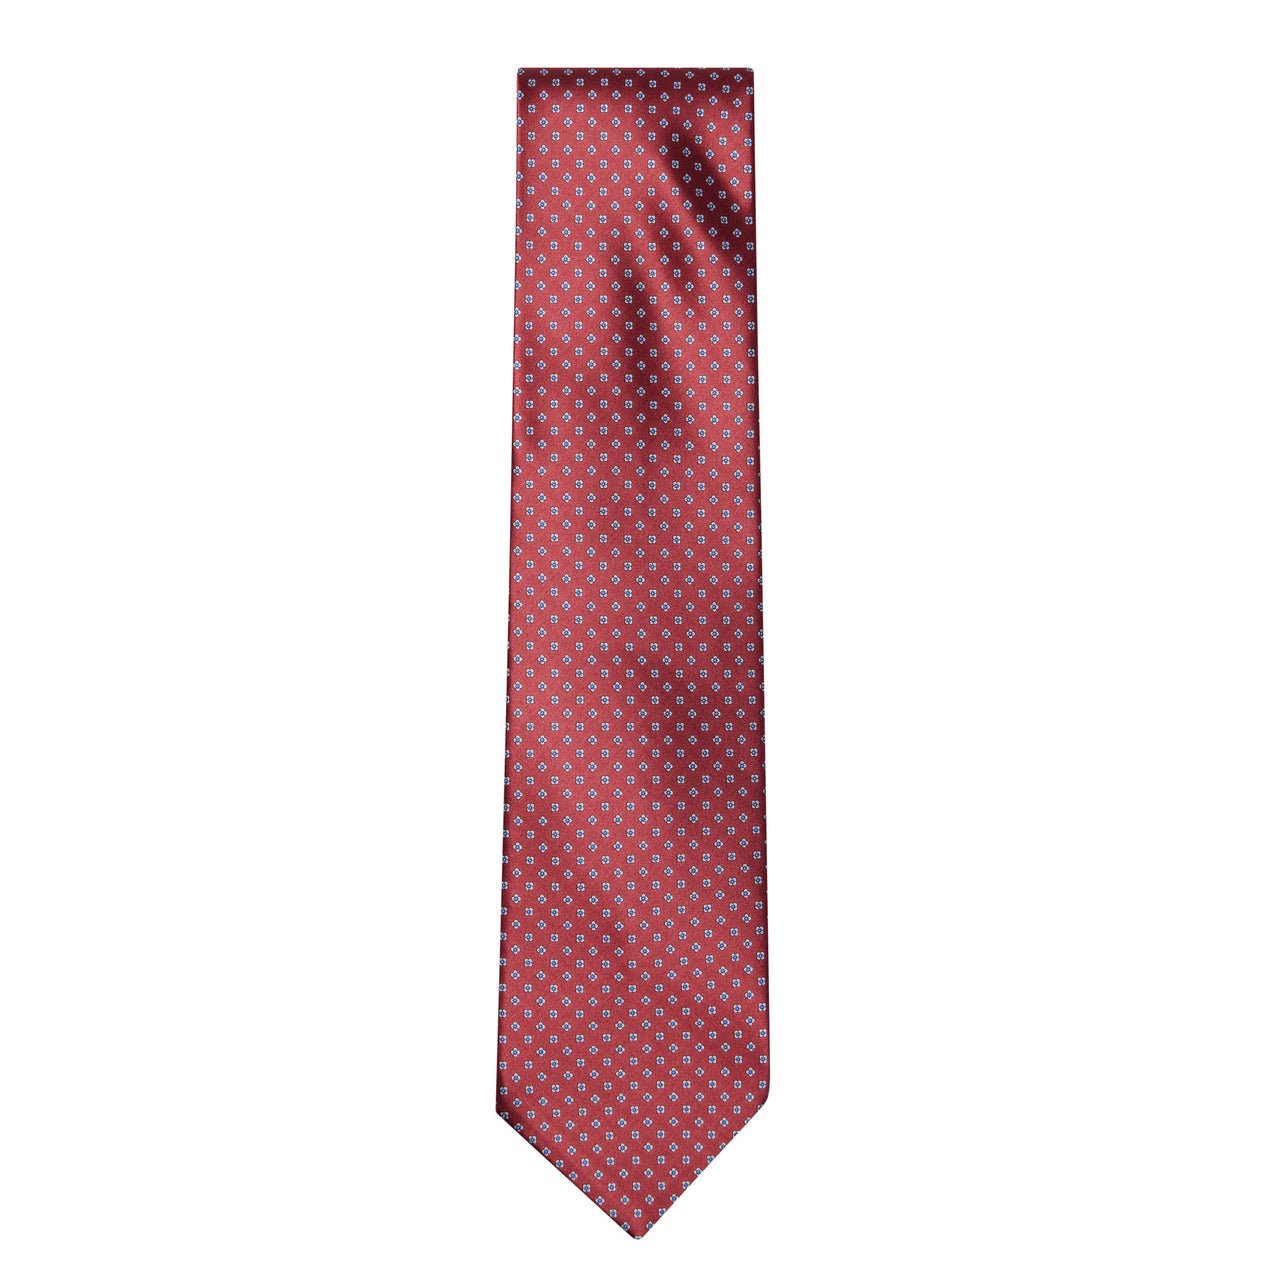 STEFANO RICCI Silk Tie RED/GREY/NAVY